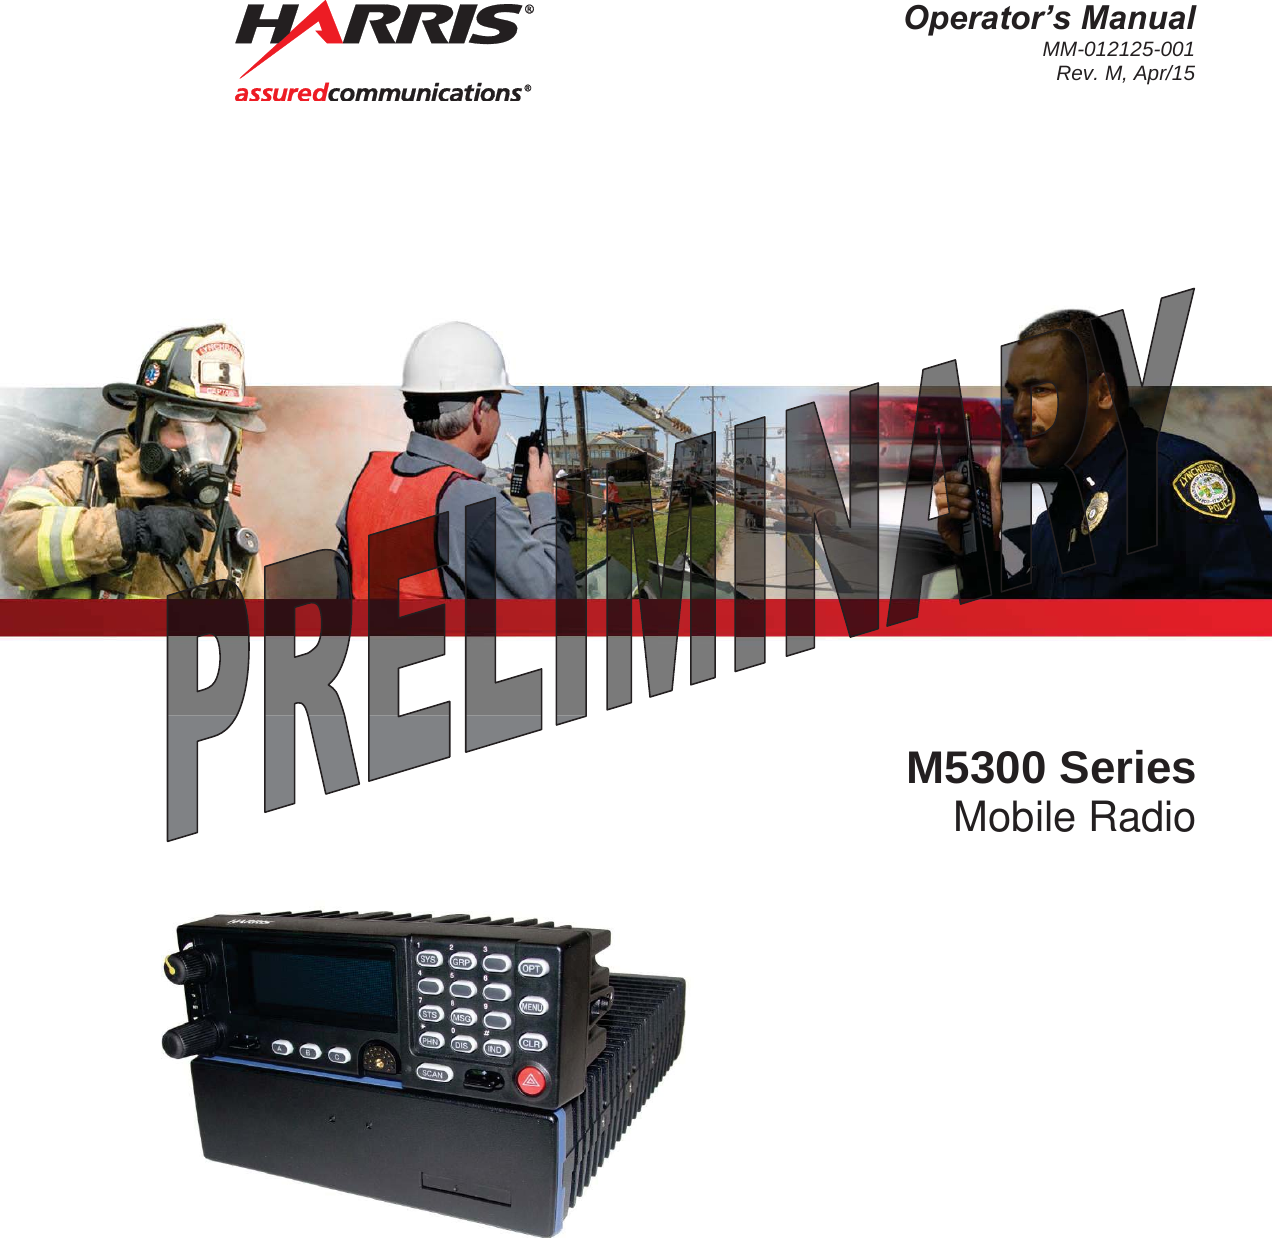  Operator’s Manual MM-012125-001 Rev. M, Apr/15   M5300 Series Mobile Radio    